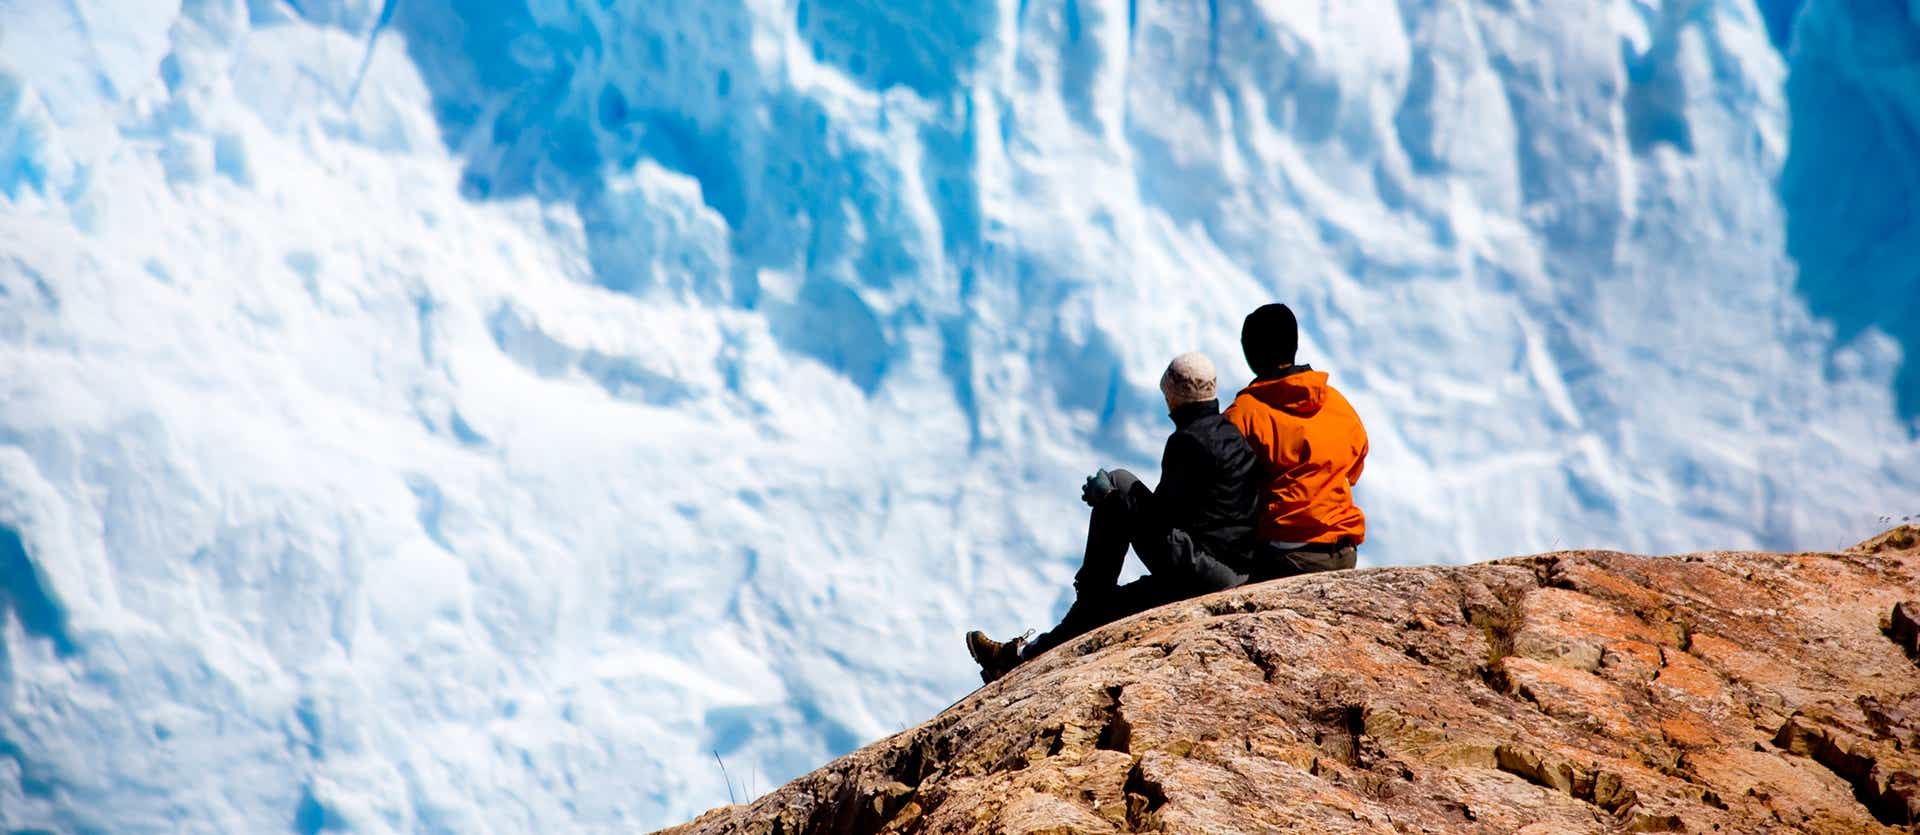 Glaciar Perito Moreno <span class="iconos separador"></span> El Calafate